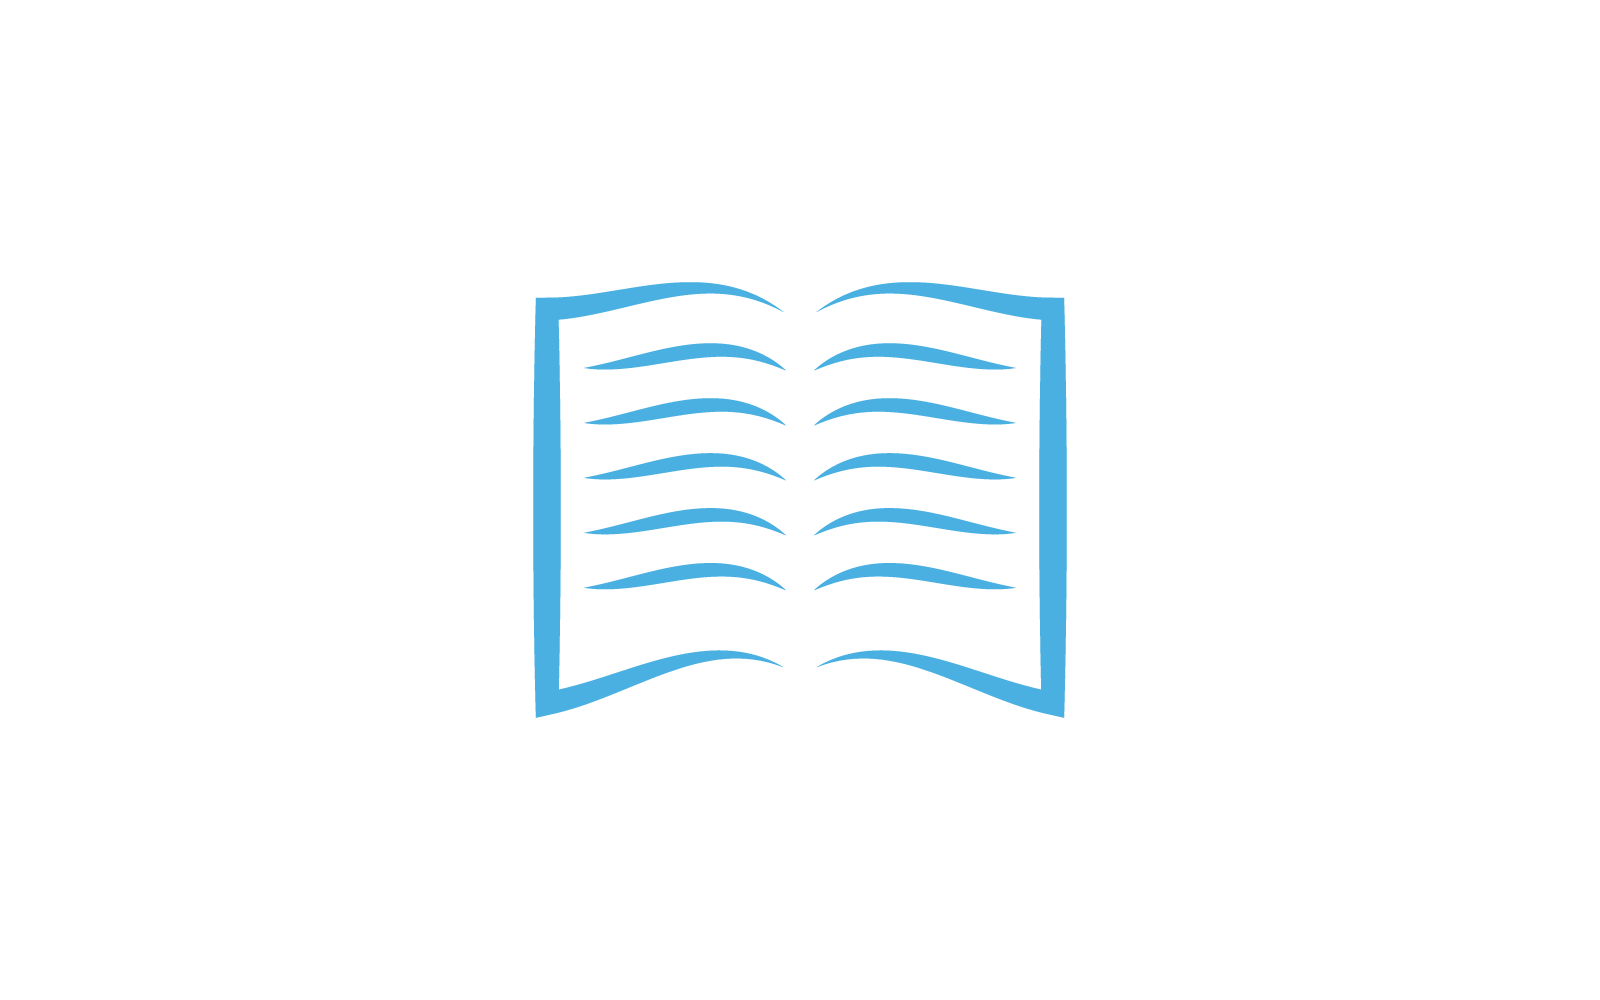 Book education design illustration logo template